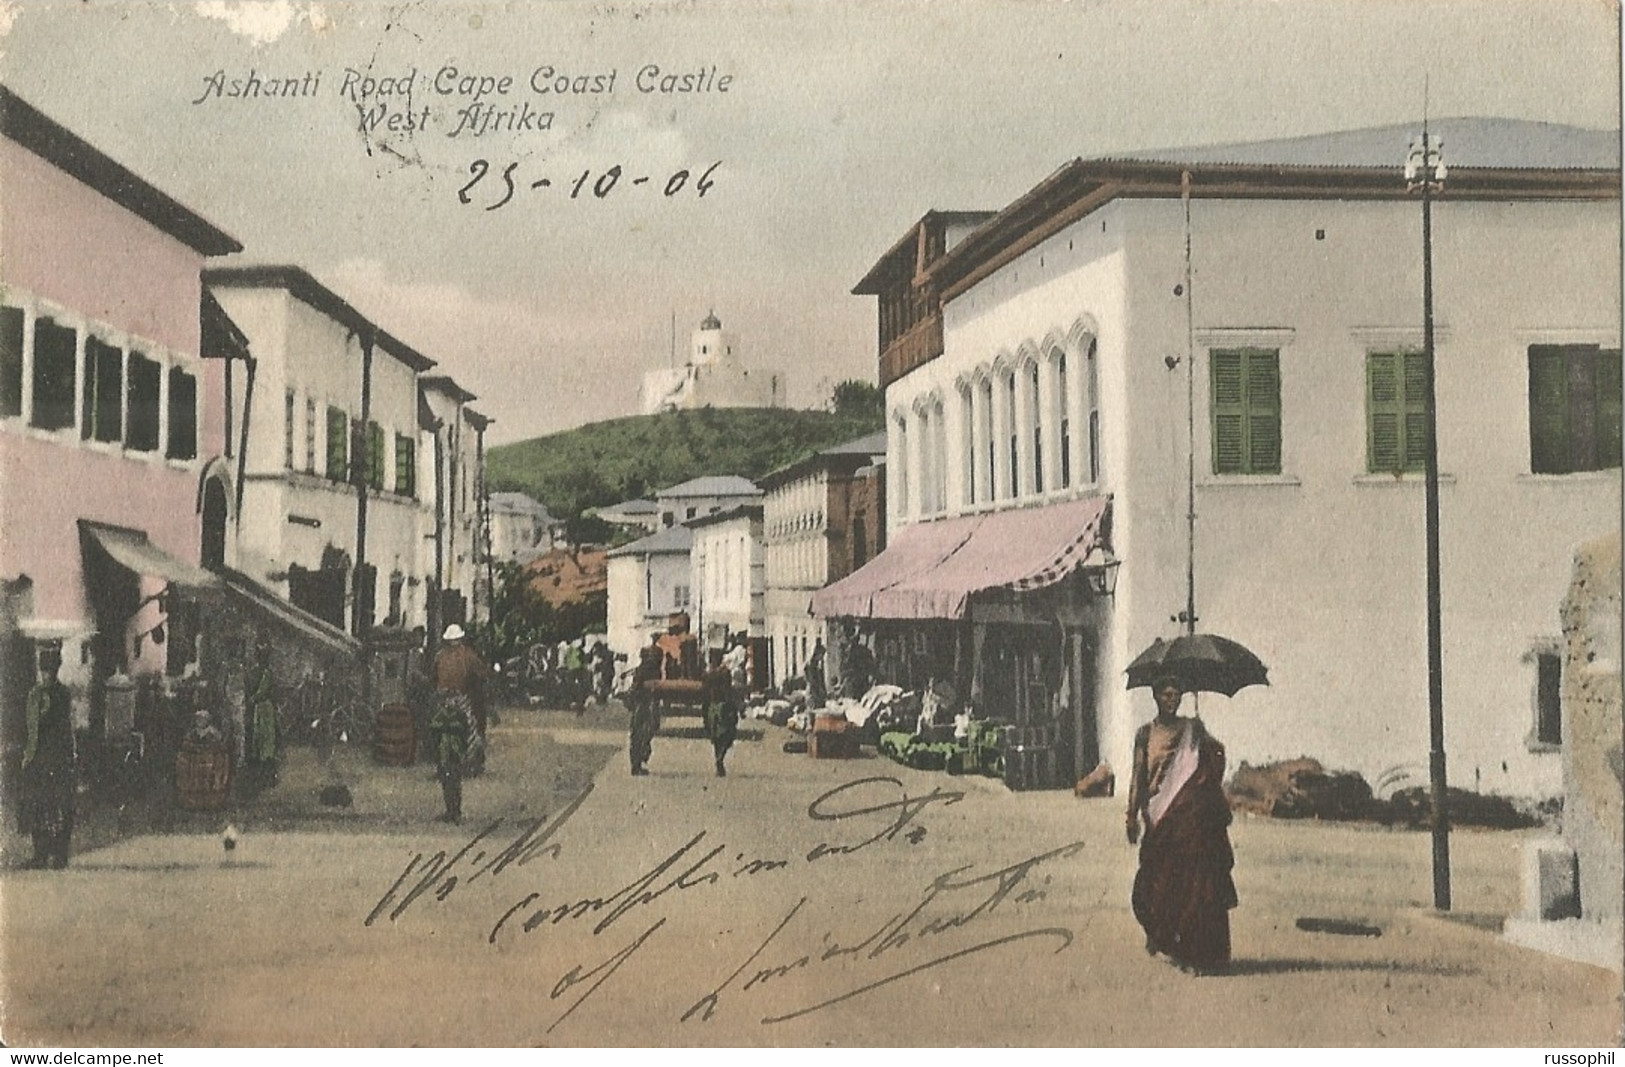 GHANA - GOLD COAST - ASHANTI ROAD CAPE COAST CASTLE - WEST AFRICA - ED. SPENKER REF #6053 - 1906 - Ghana - Gold Coast